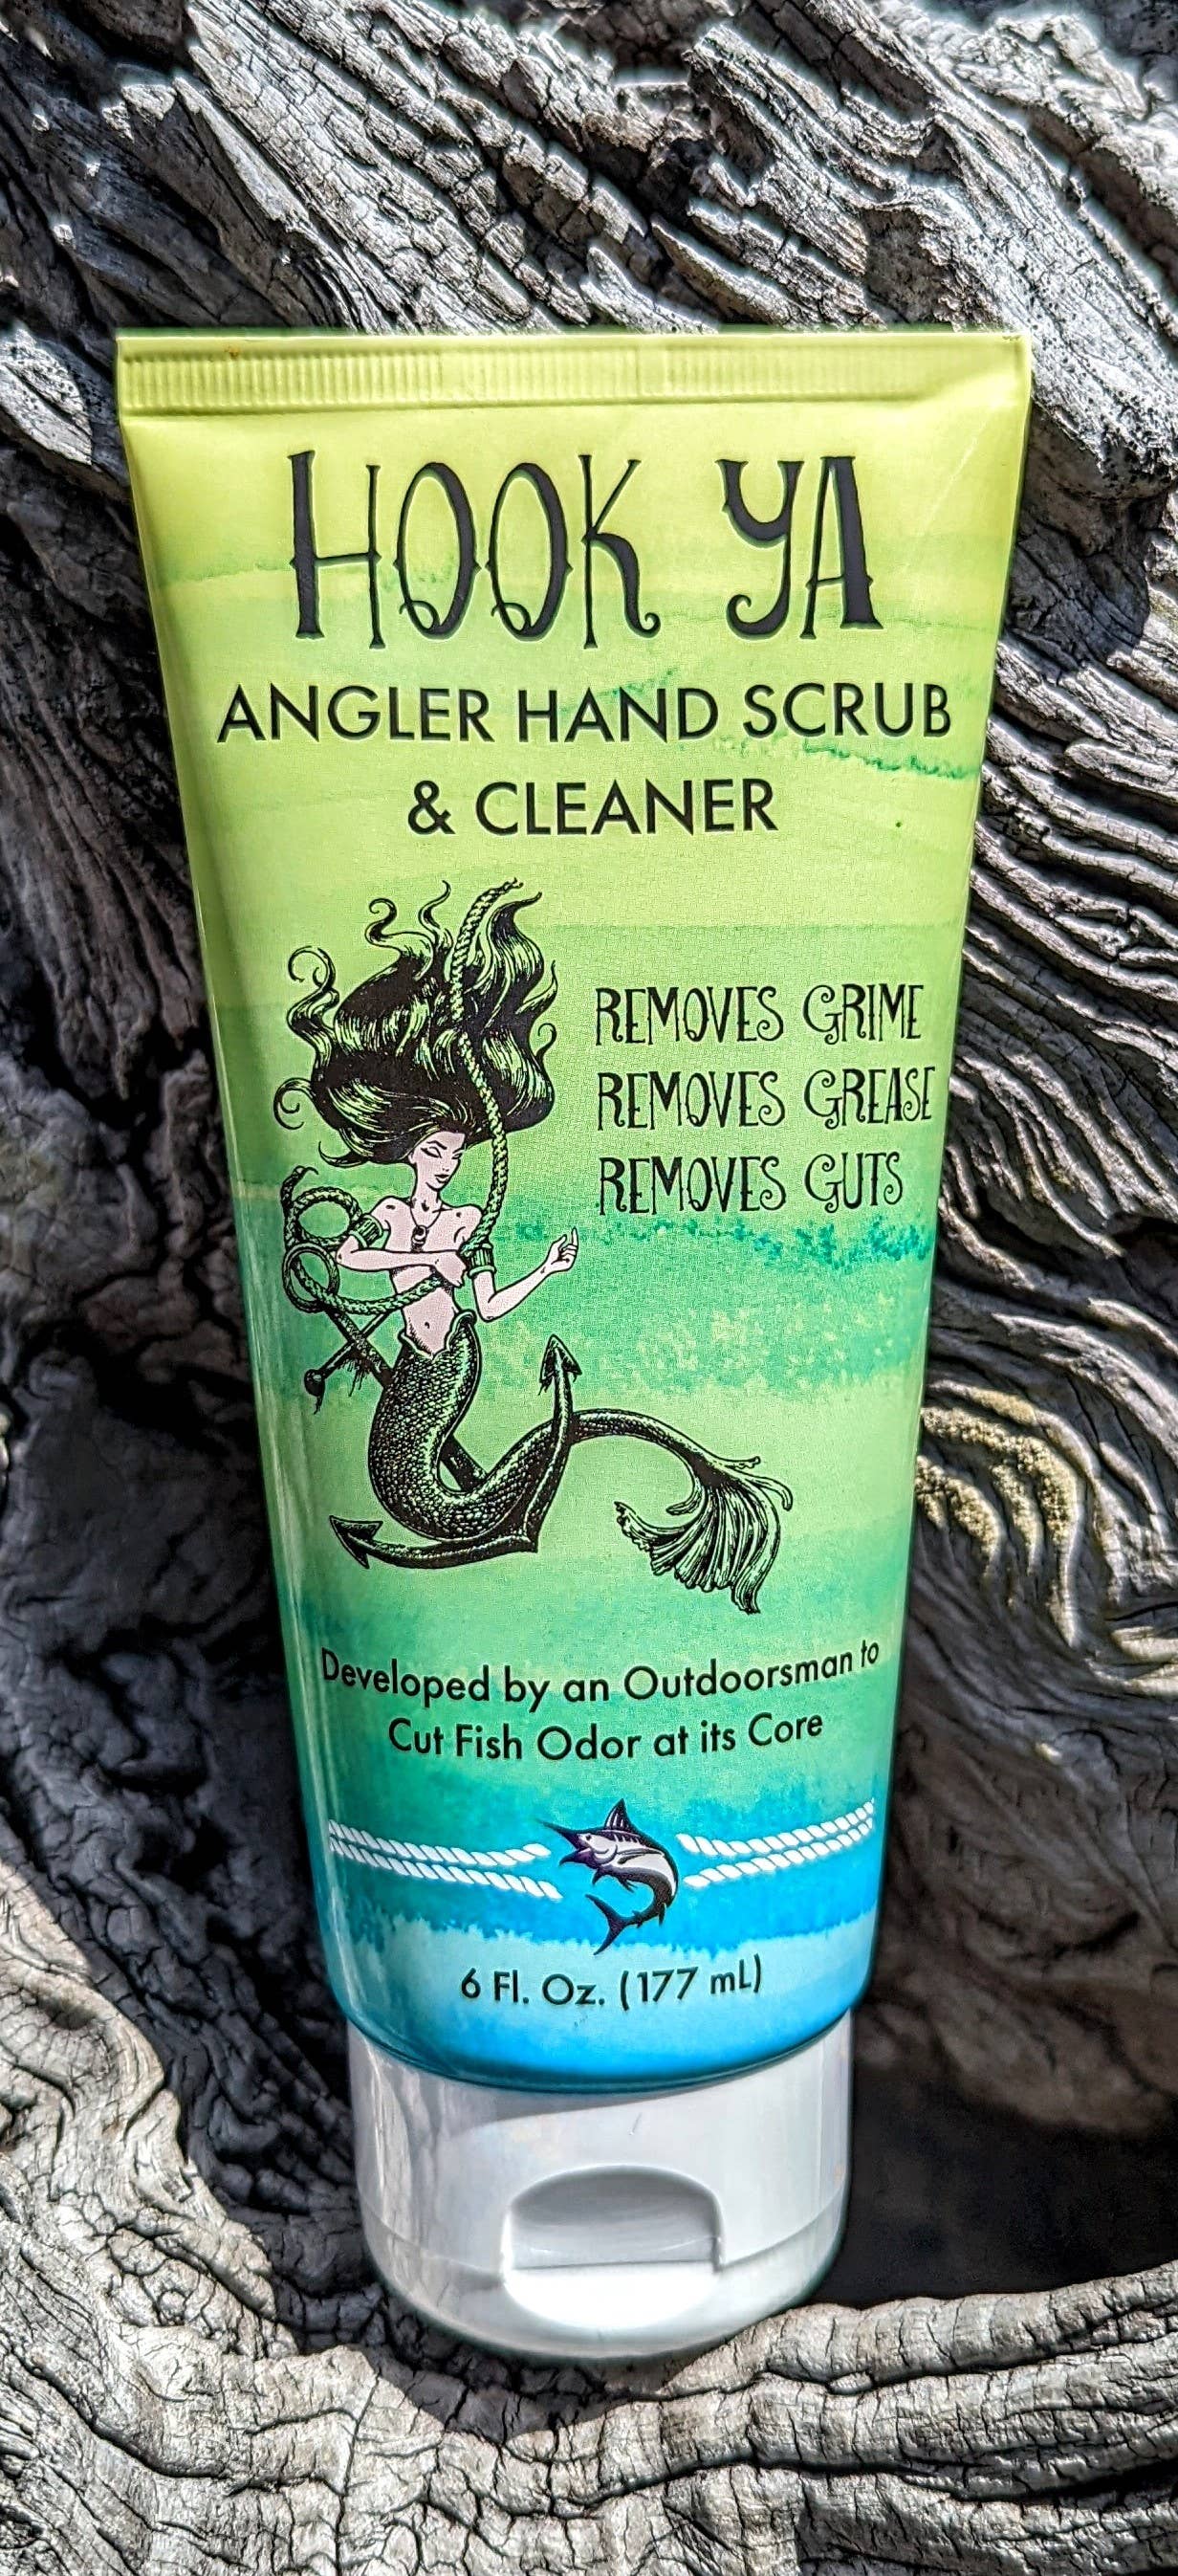 Angler Hand Scrub & Cleaner